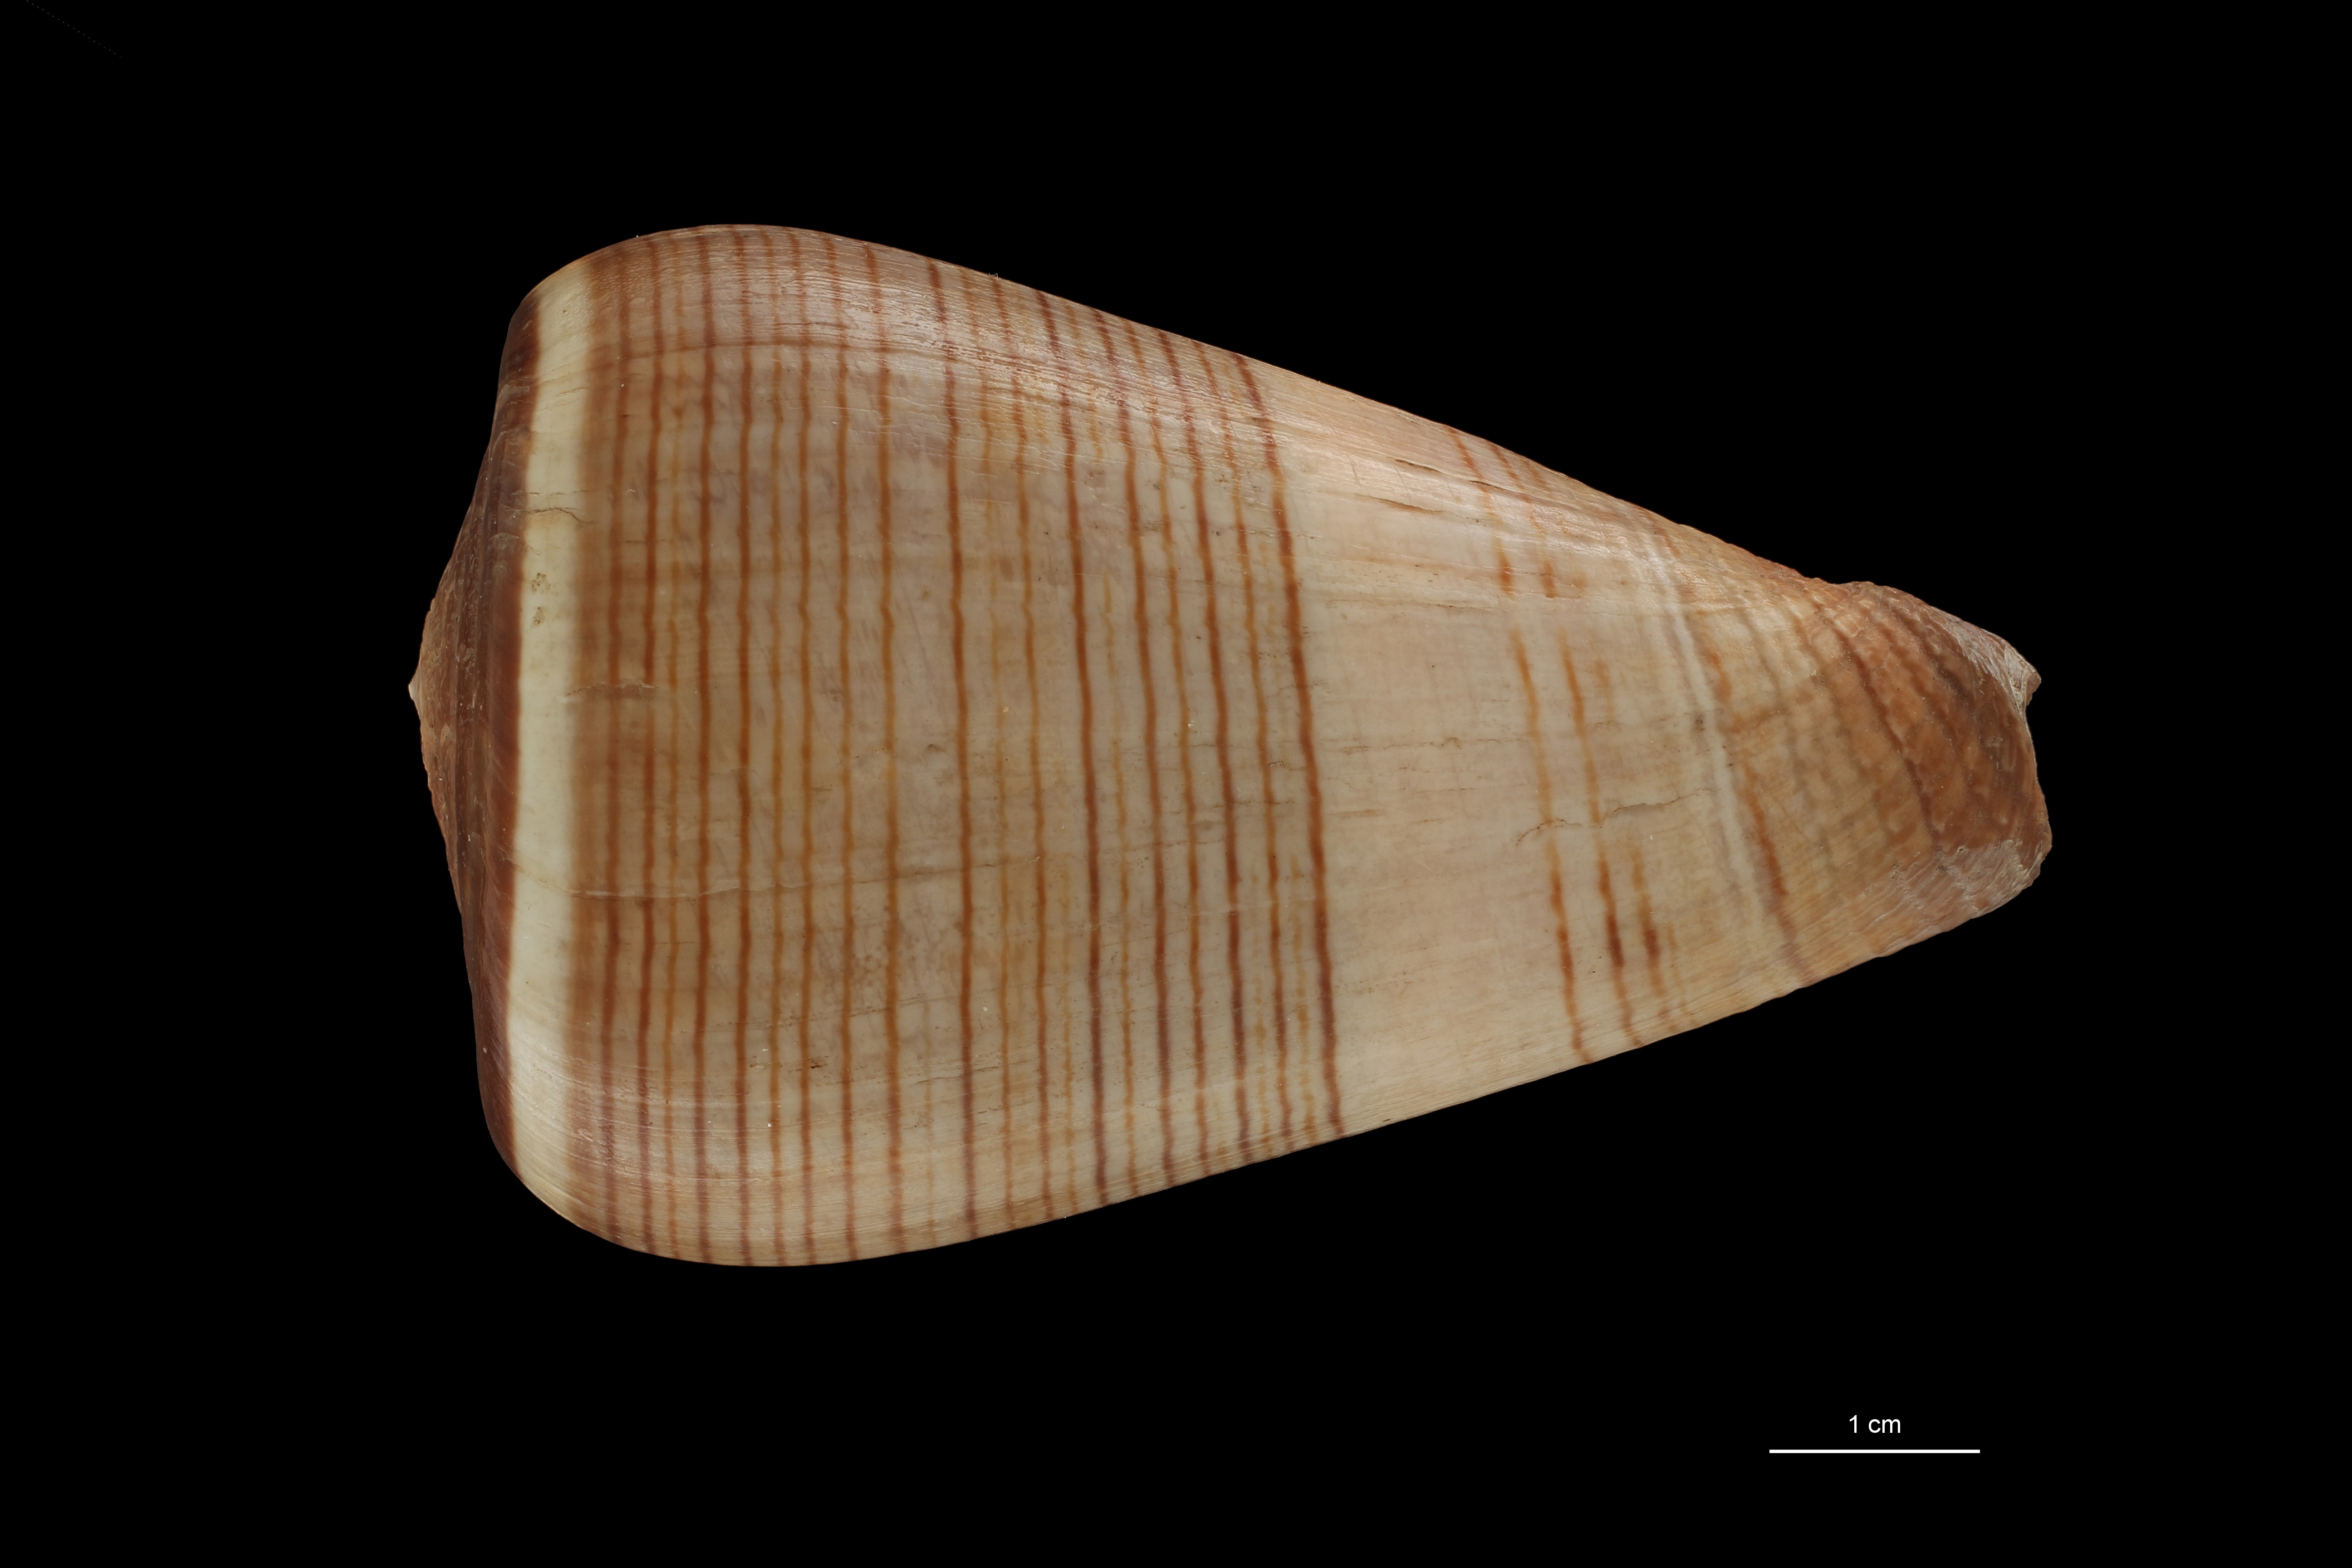 BE-RBINS-INV HOLOTYPE MT.2532 Conus figulinus var. insignis DORSAL ZS PMax Scaled.jpg